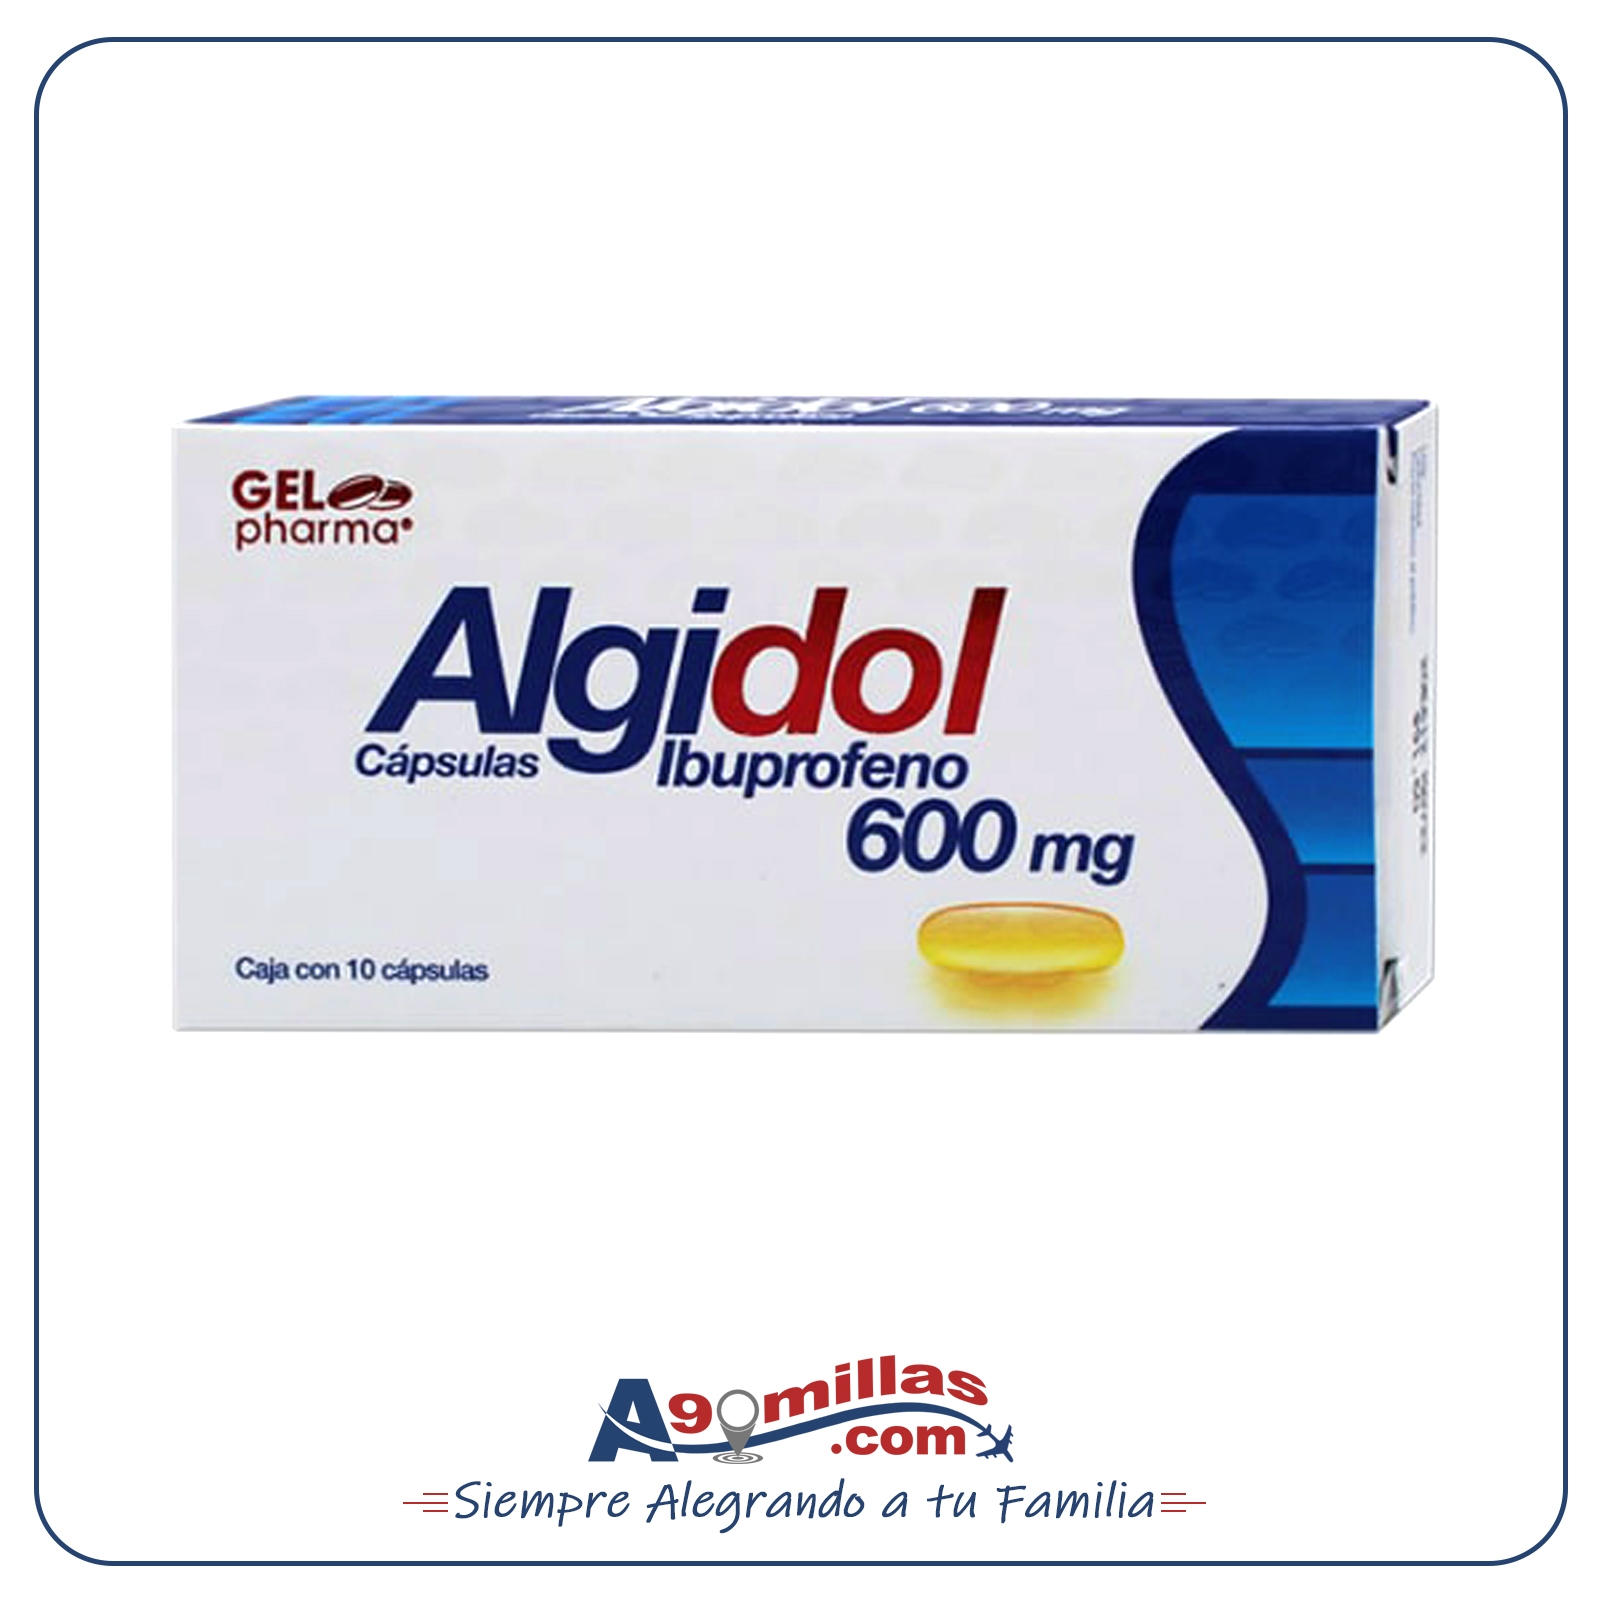 Algidol (Ibuprofeno) de 600 mg